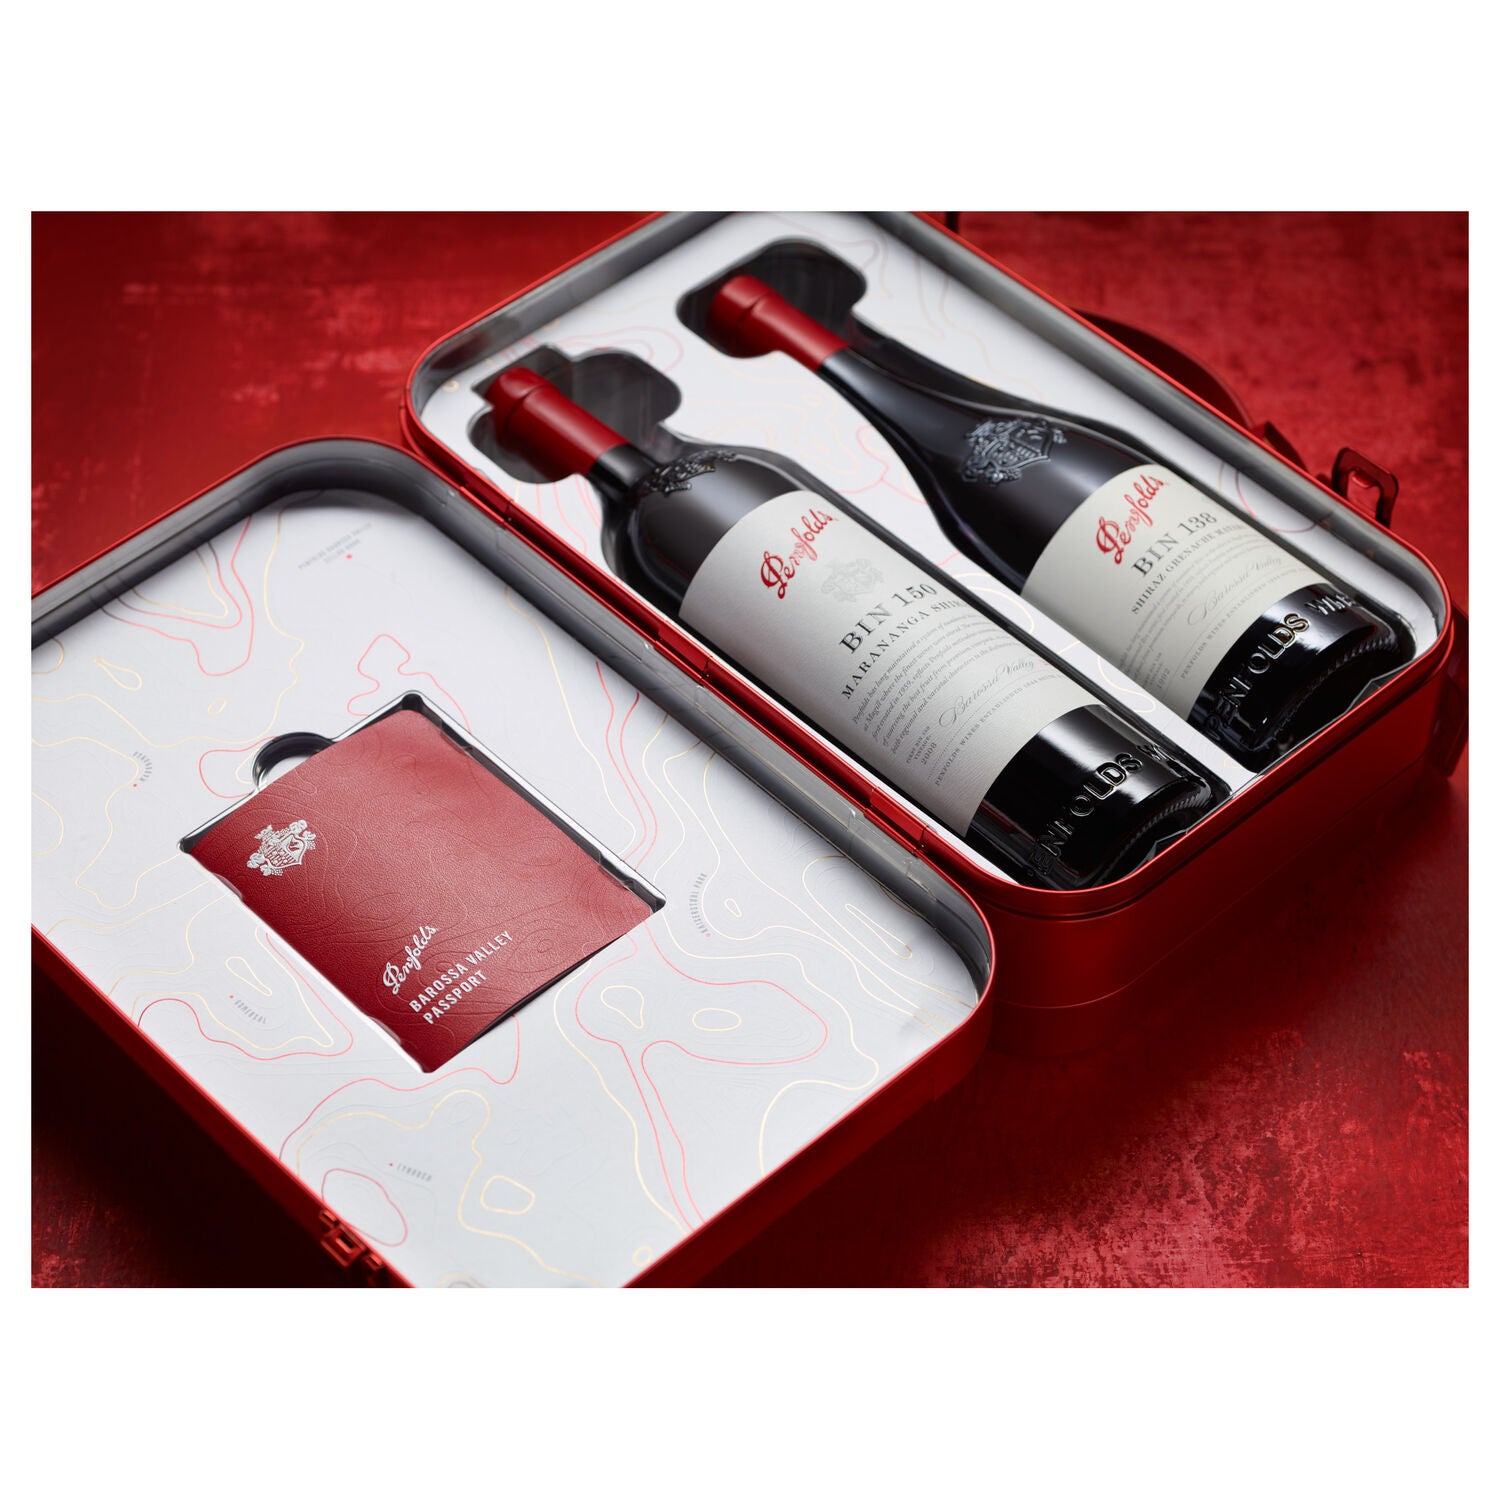 Penfolds Limited Release 2018 Dual Bin150 Shiraz & Bin138 Shiraz Grenache Mataro 2 Bottle Giftbox 750mL